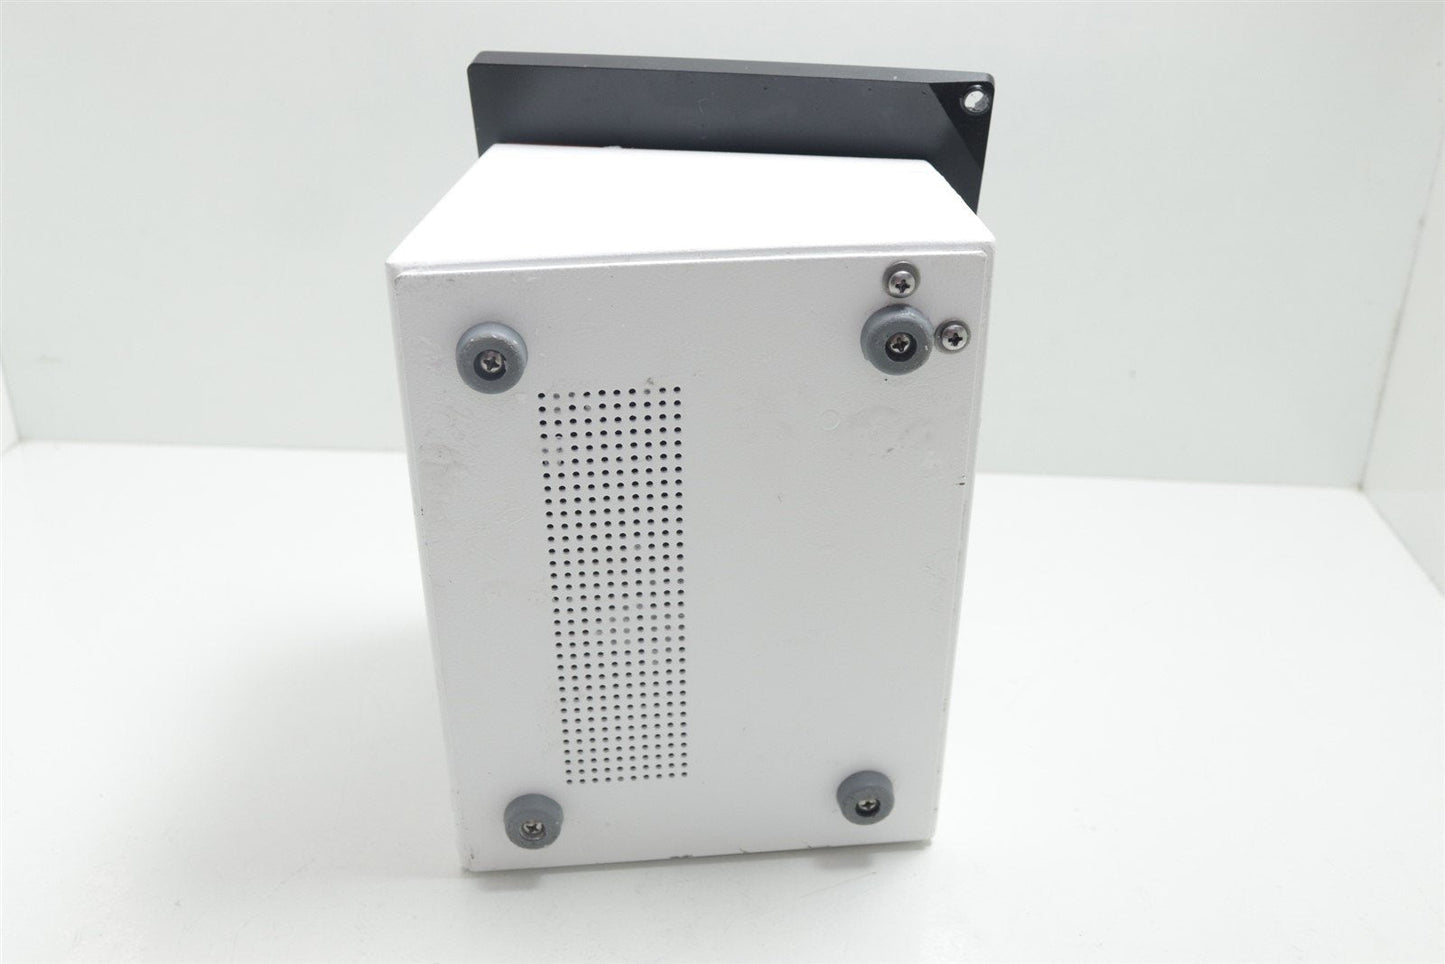 Leica Surgipath TrimEase 9000 Paraffin Melting station Tested Working